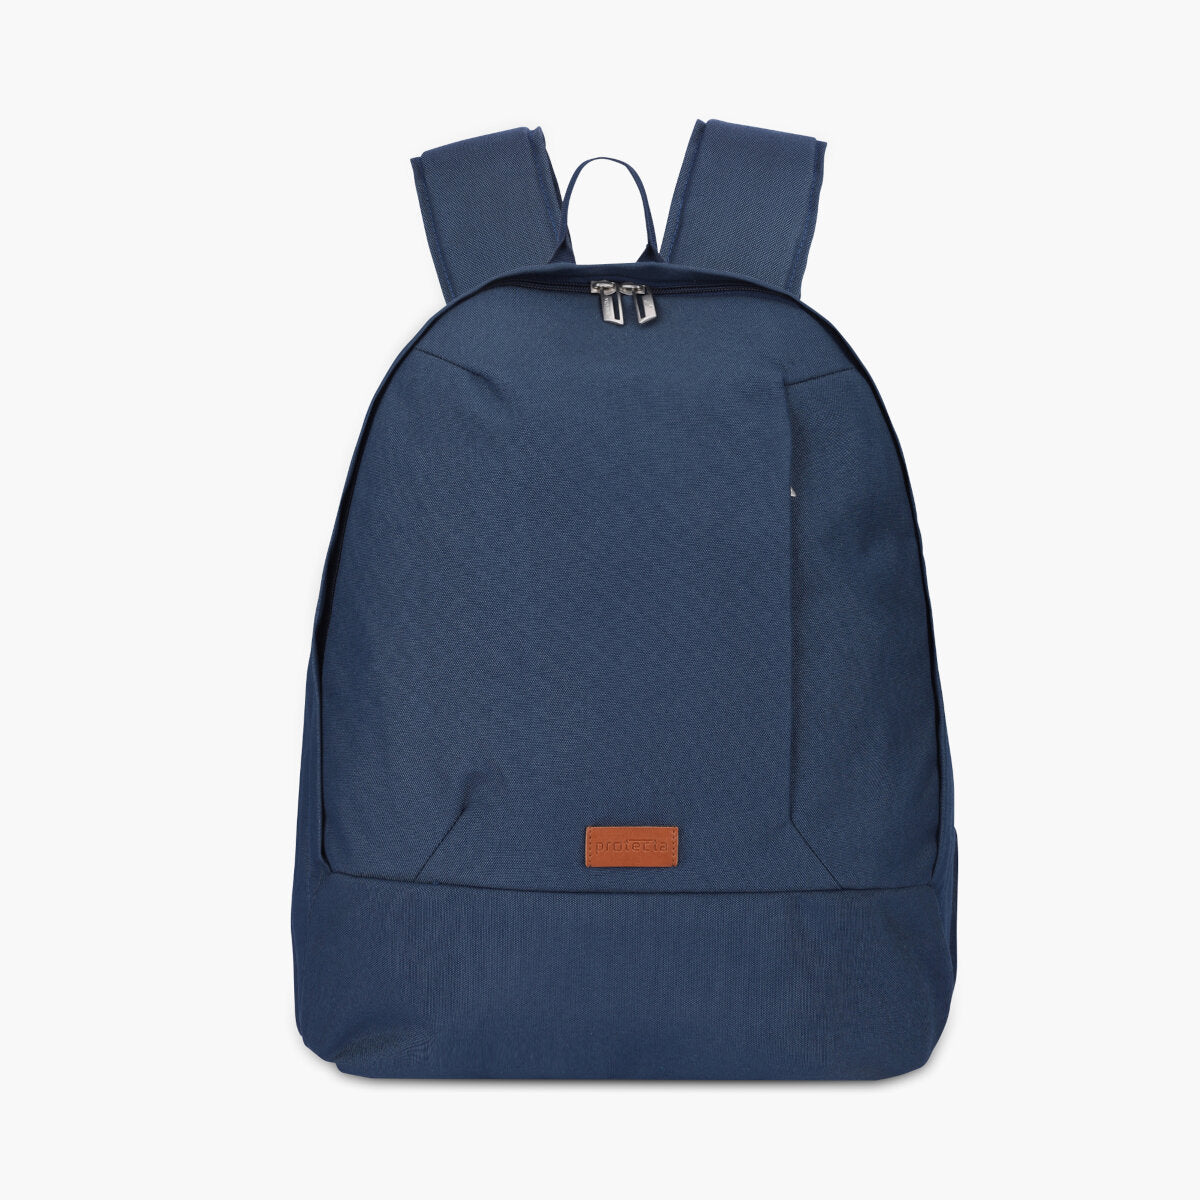 Blue | Protecta Steady Progress Laptop Backpack - Main